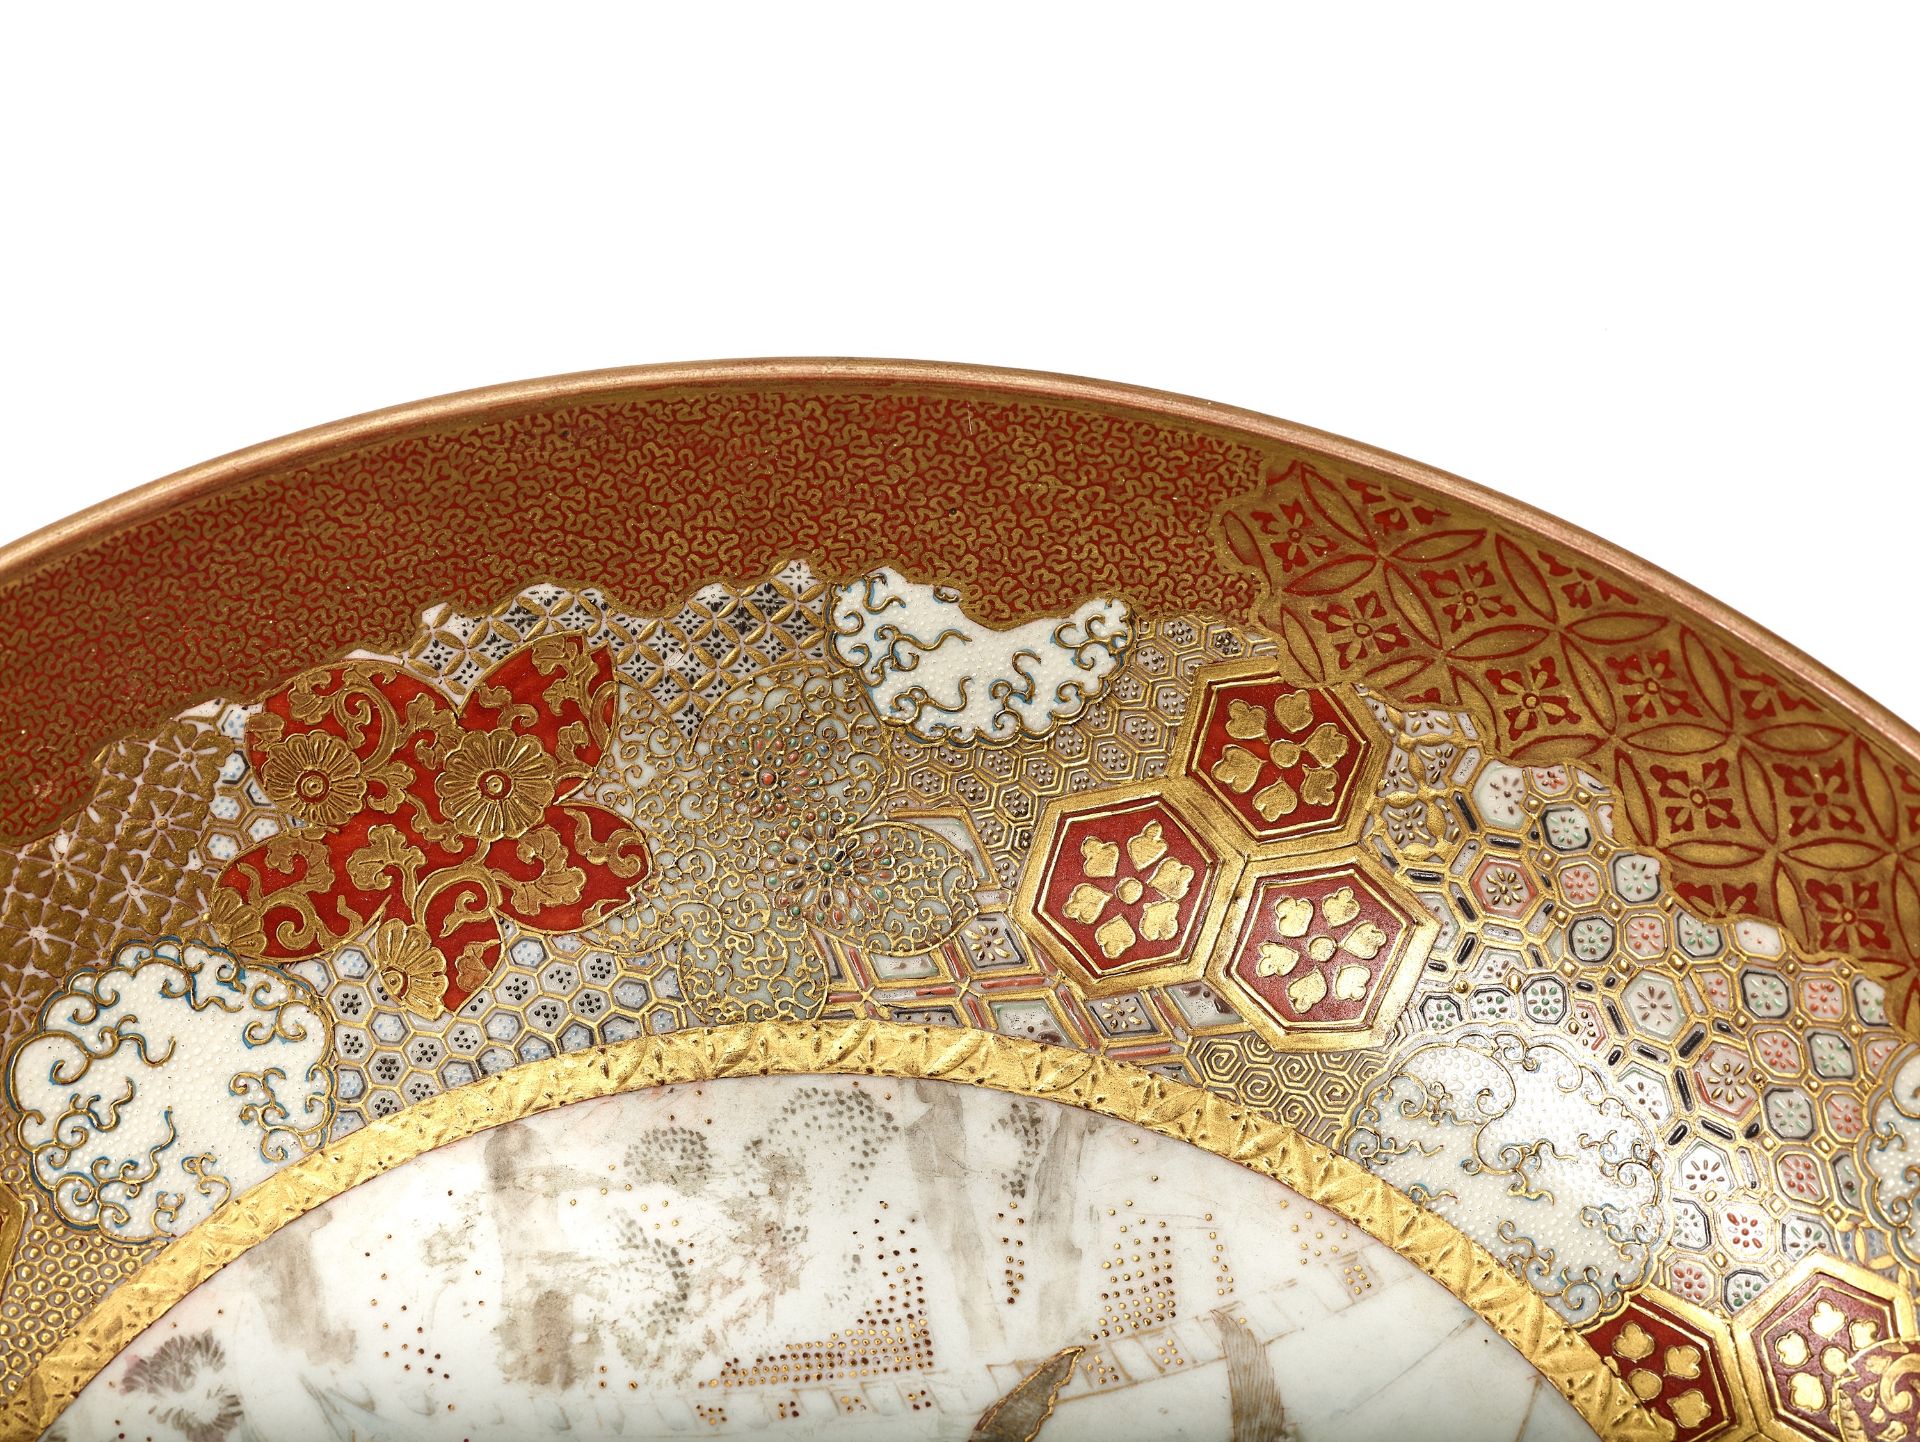 A LARGE KUTANI PORCELAIN PLATE WITH SAMURAI SCENE, MEIJI PERIOD - Image 2 of 4